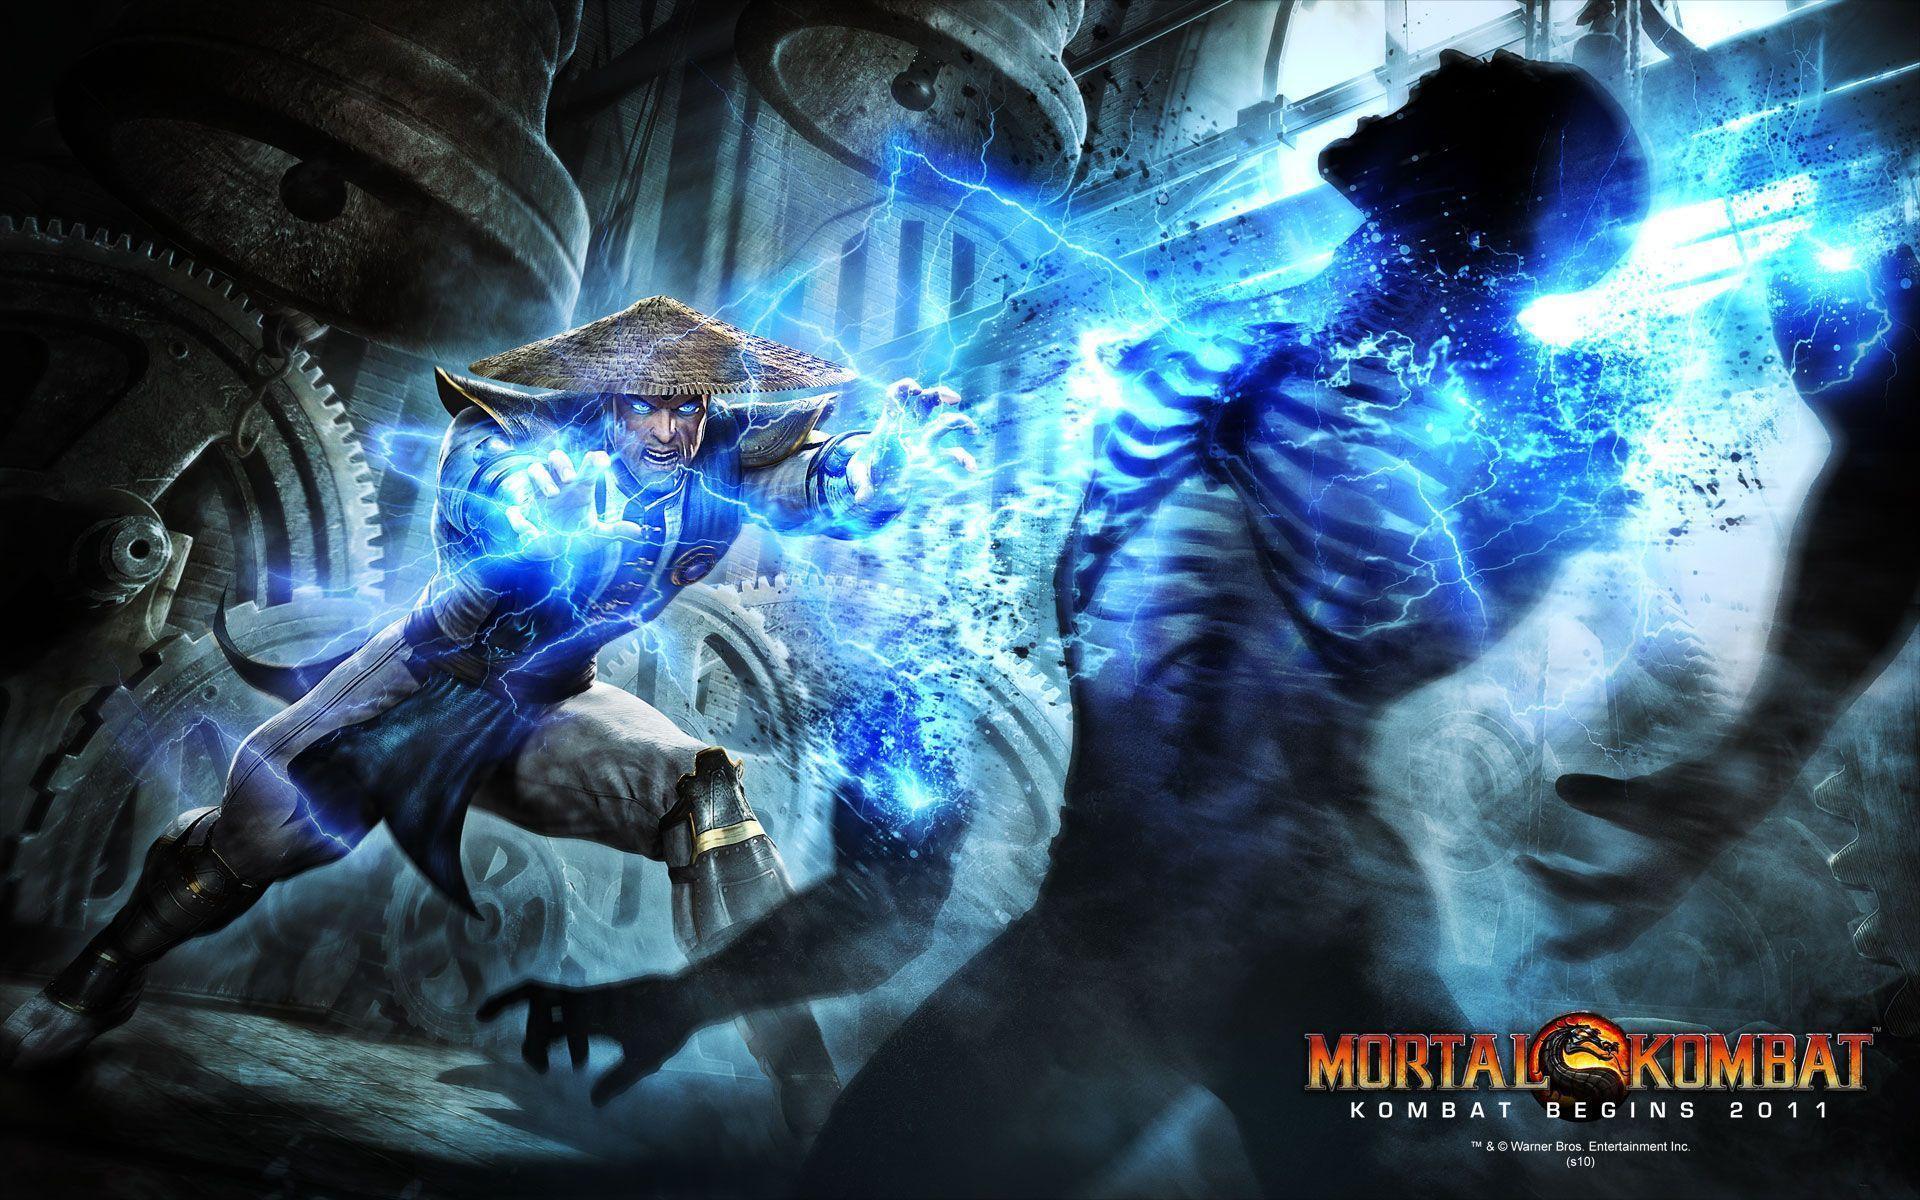 Raiden in Mortal Kombat Begins 2011 Wallpaper